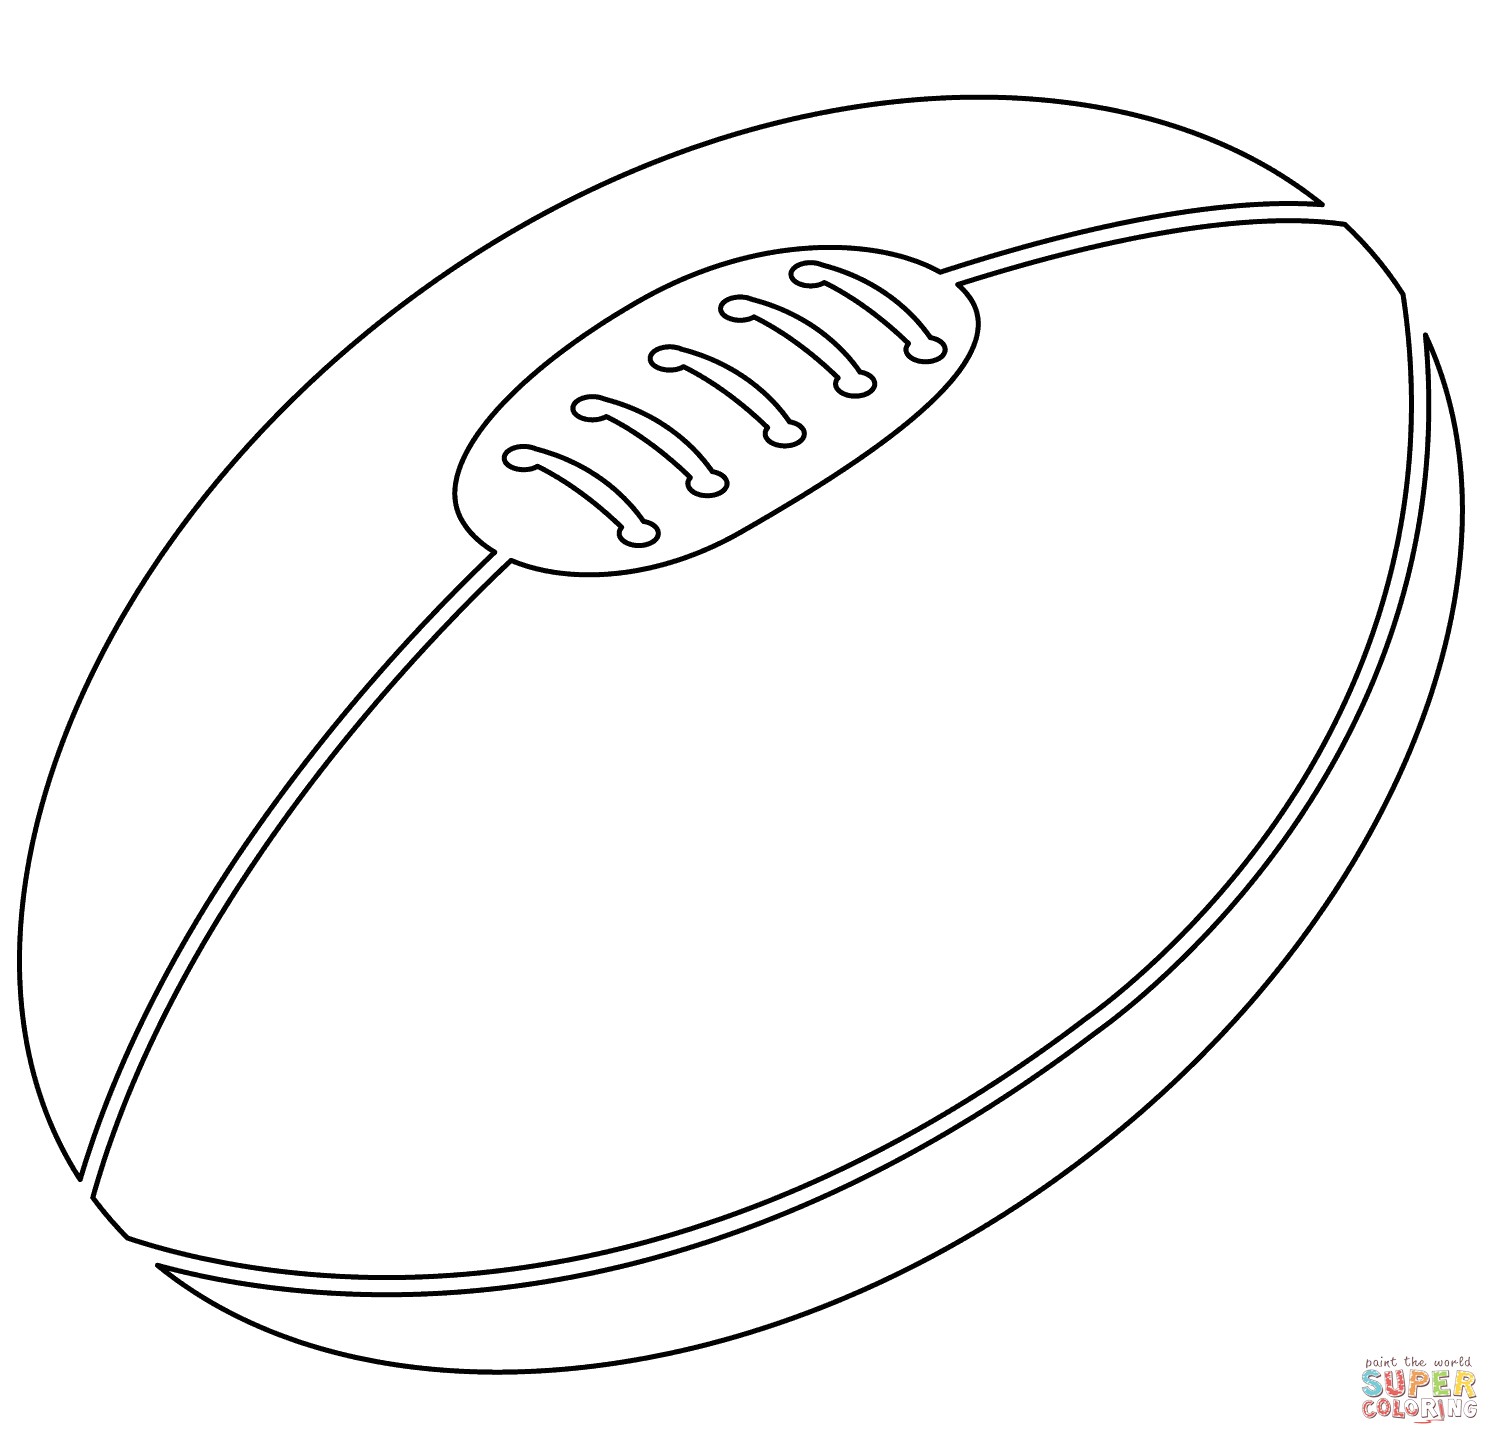 Gratuit Dessin Coloriage Rugby Contemporain Construction Coloriage Ballon De Rugby